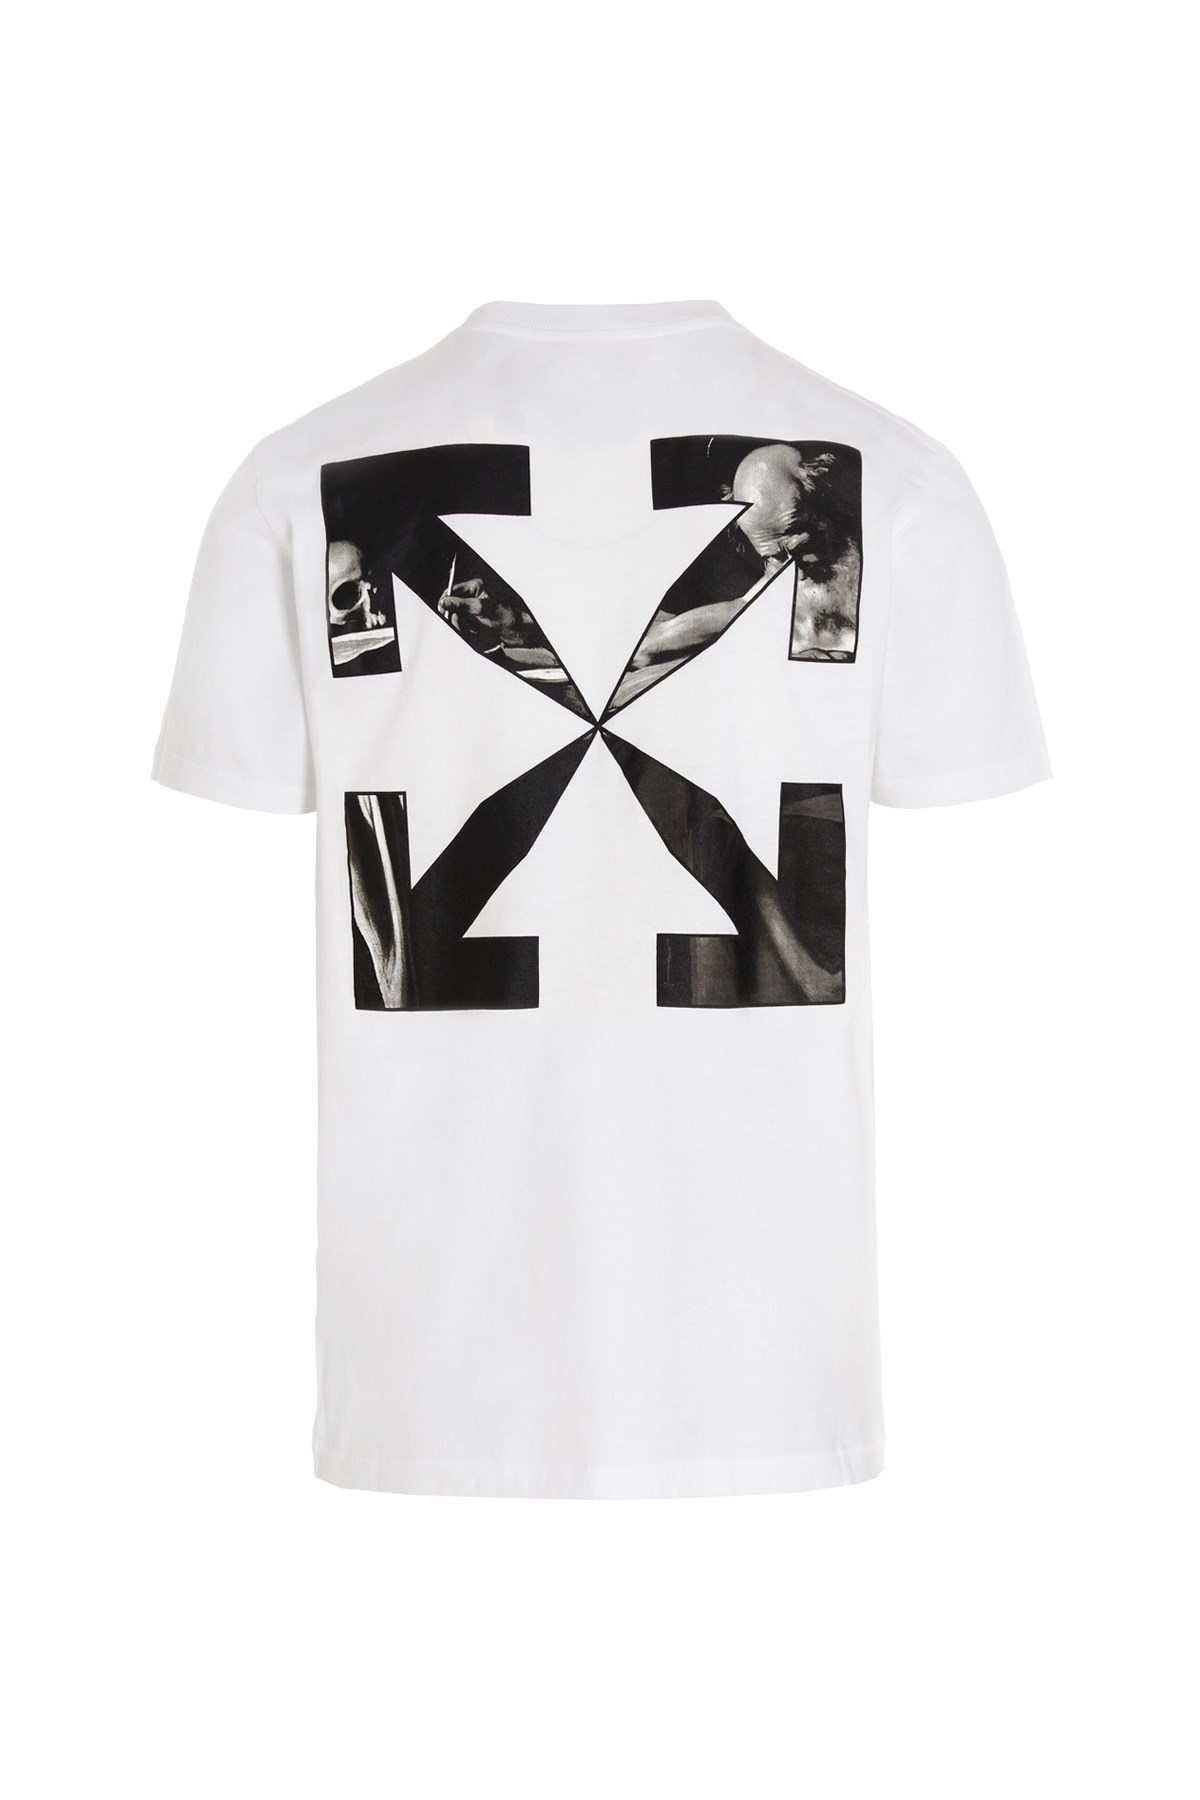 OFF-WHITE 'Caravaggio Arrow’ T-Shirt